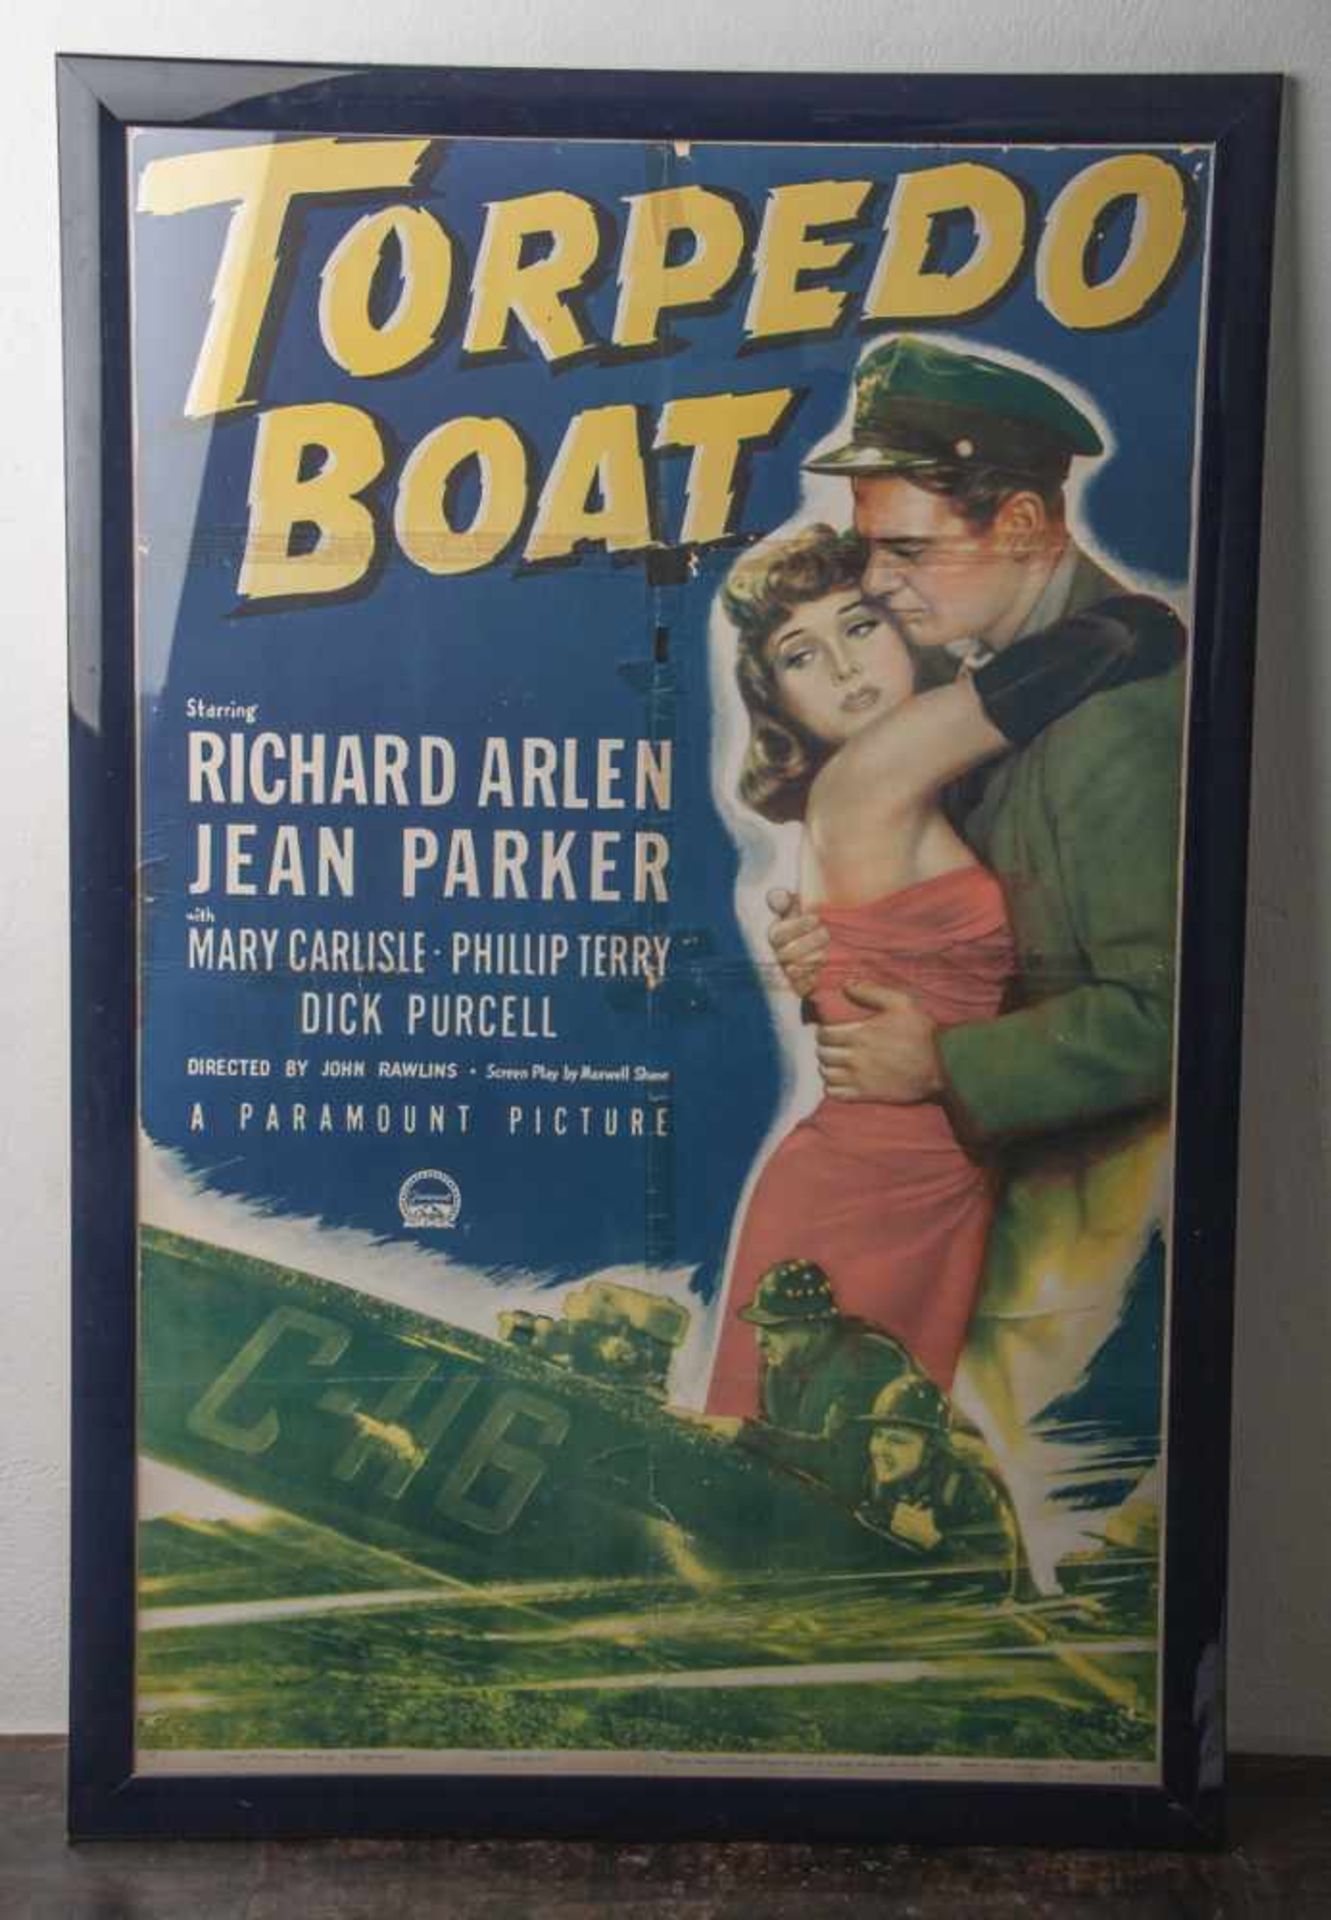 Altes Filmplakat "Torpedo Boat" (USA, 1940er Jahre), Copyright 1941, Paramount Pictures,bez.